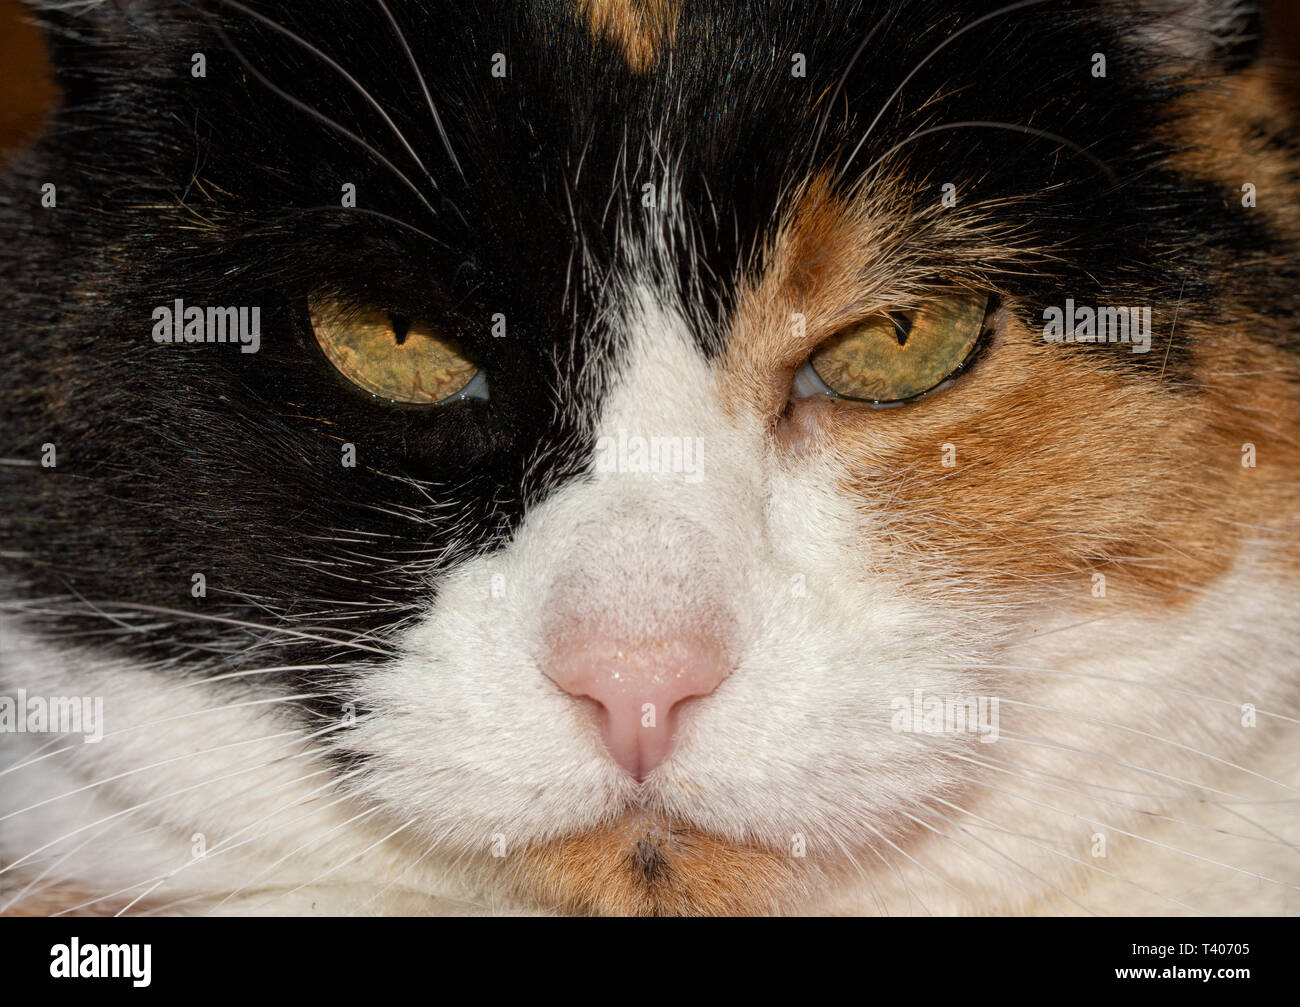 Closeup of a calico cat's face, staring at the viewer menacingly Stock Photo